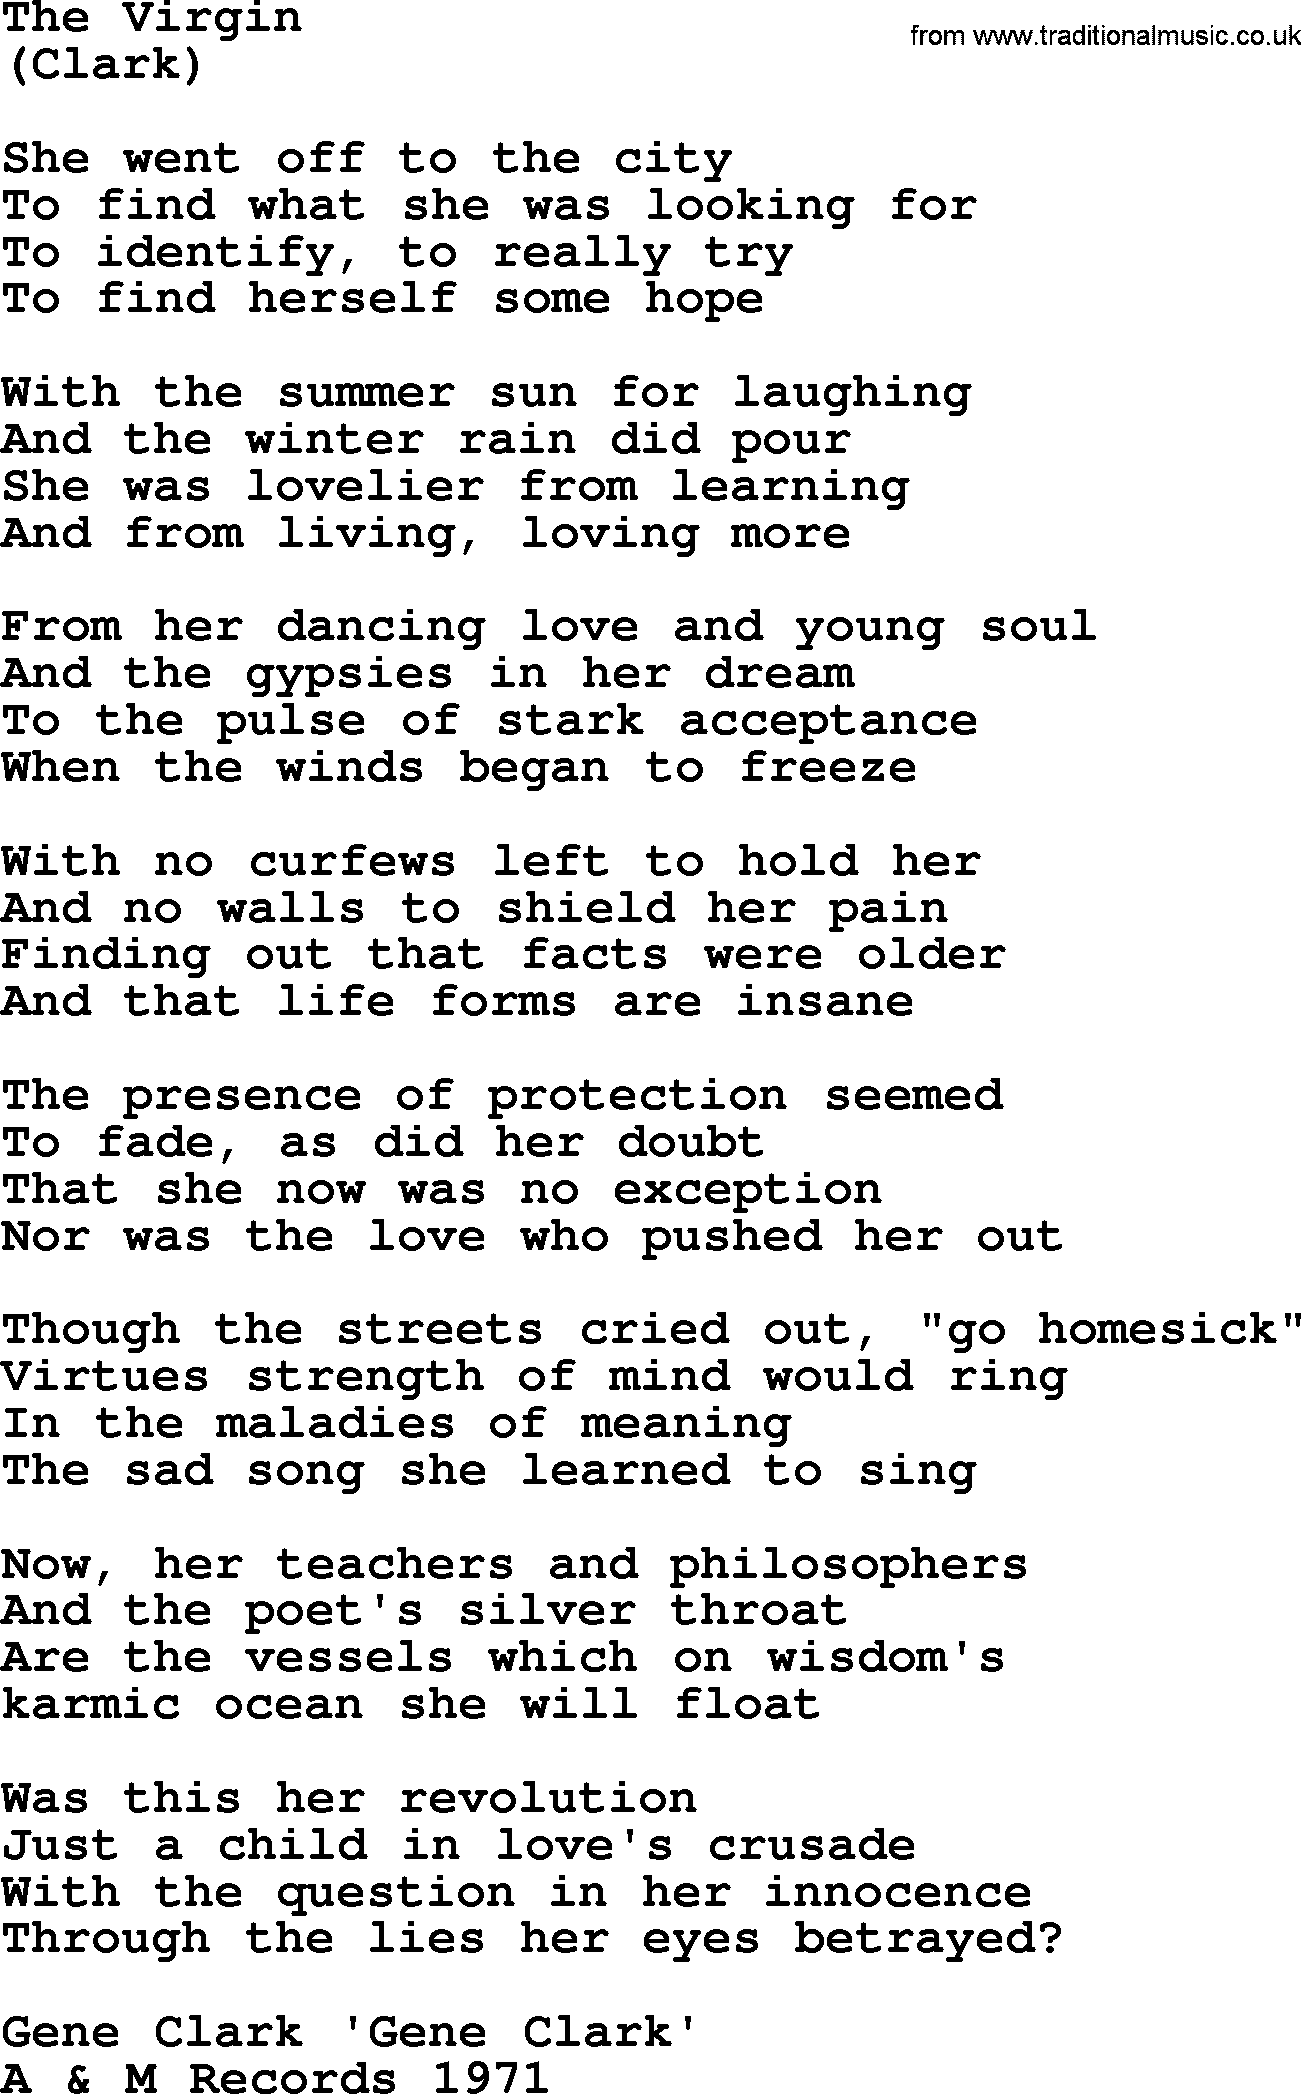 The Byrds song The Virgin, lyrics